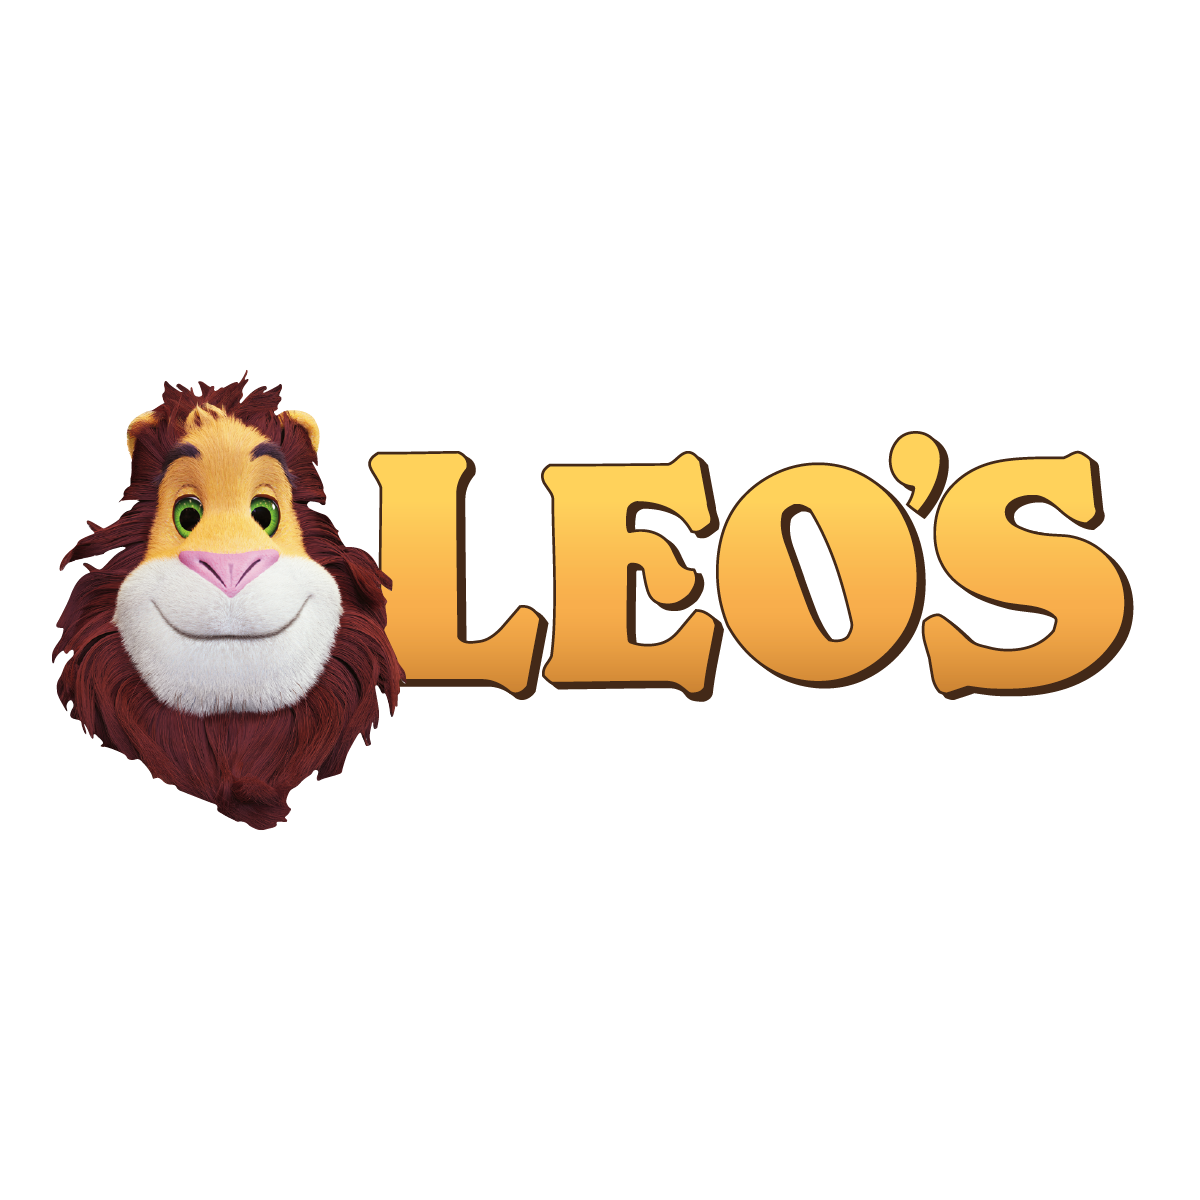 Logo Leo's